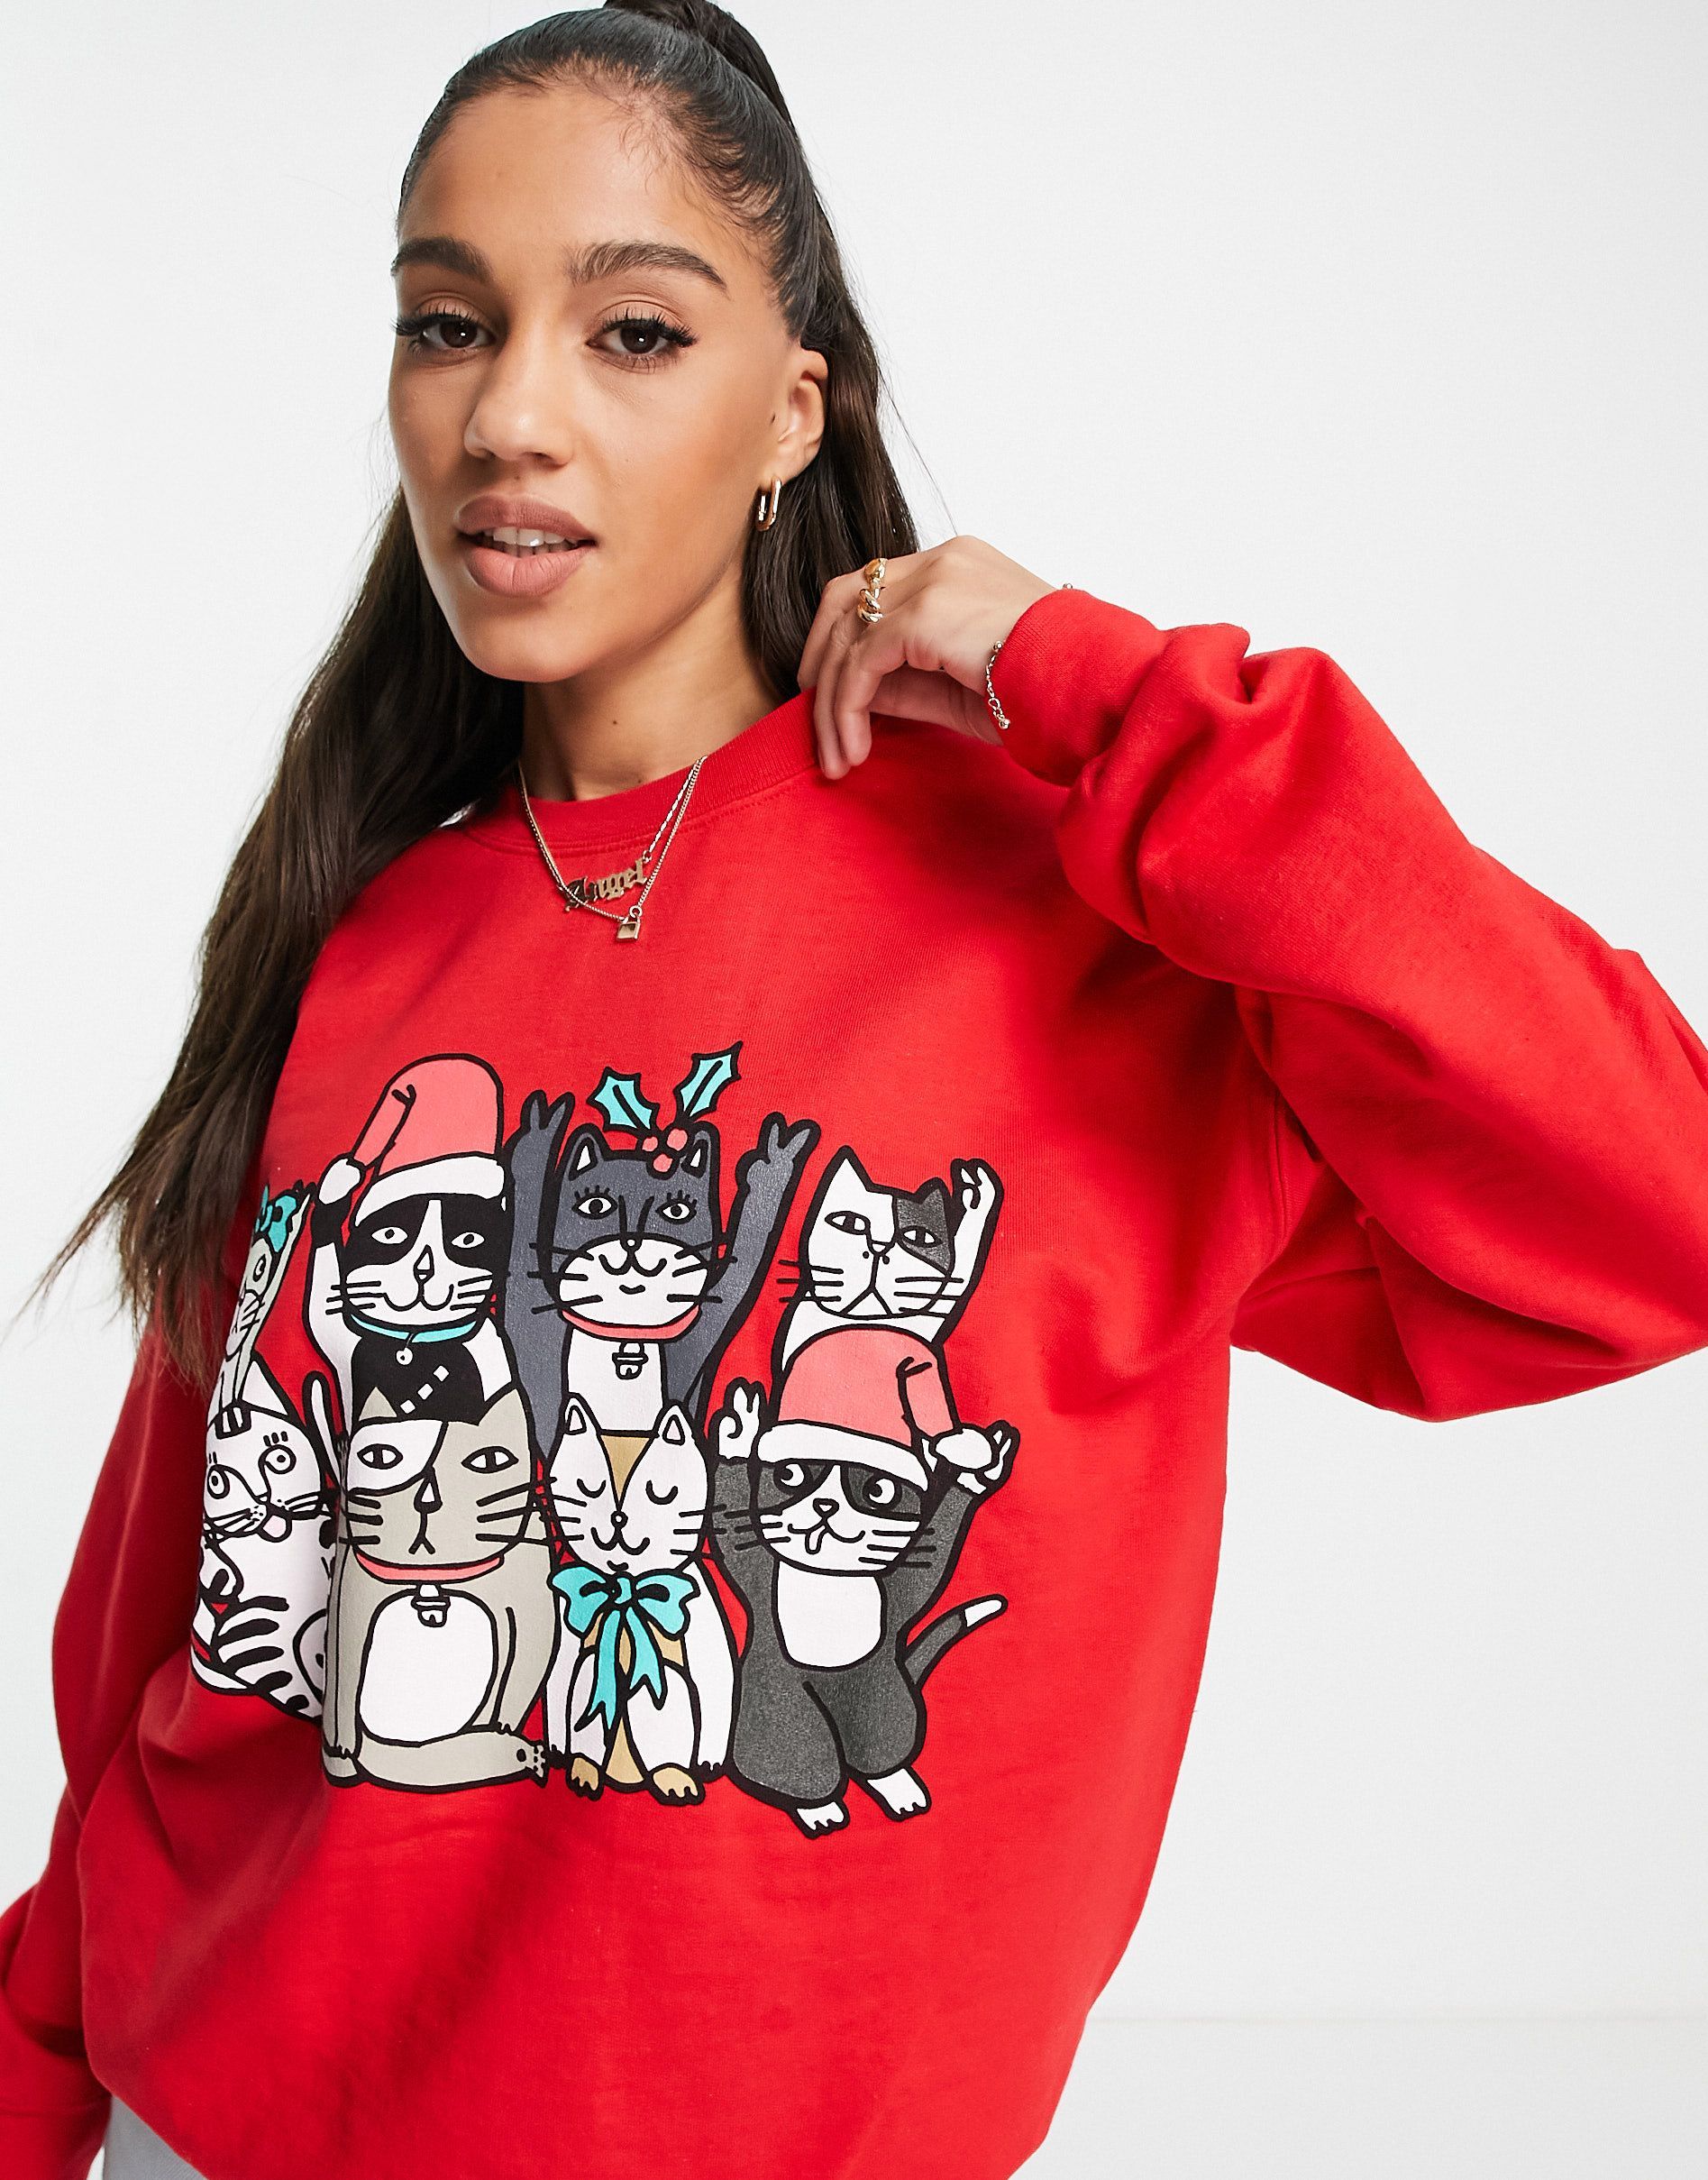 Ladies Christmas Jumper,Funny Graphic Reindeer Xmas Sweatshirt Crew Neck Long Sleeve Pullover Tops Blouse Christmas T Shirt for Women UK